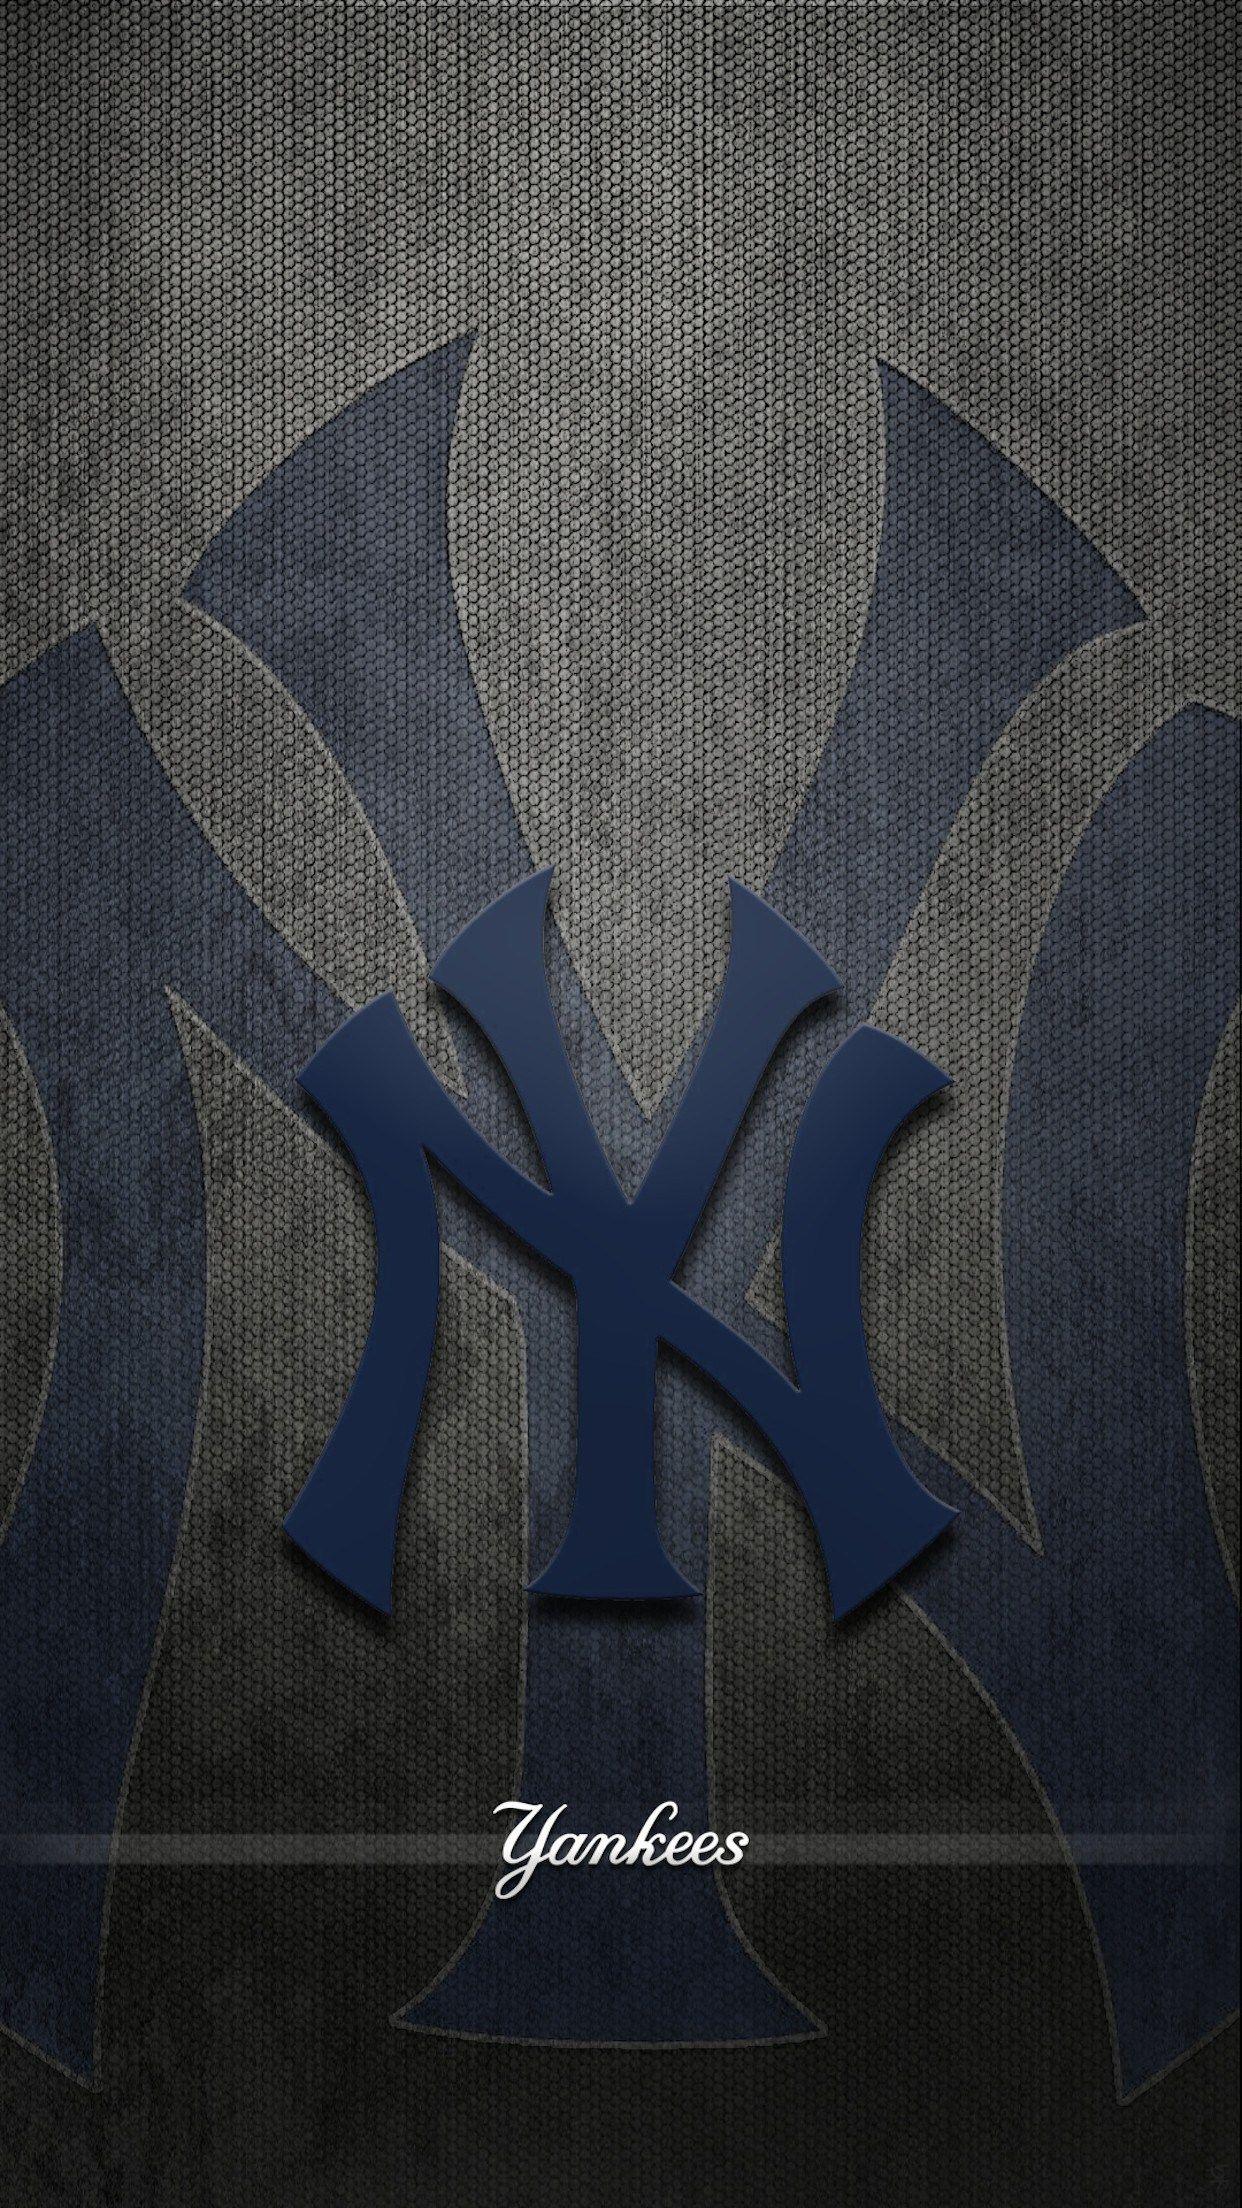 Beautiful New York Yankees Wallpaper iPhone. Ny yankees, Wallpaper